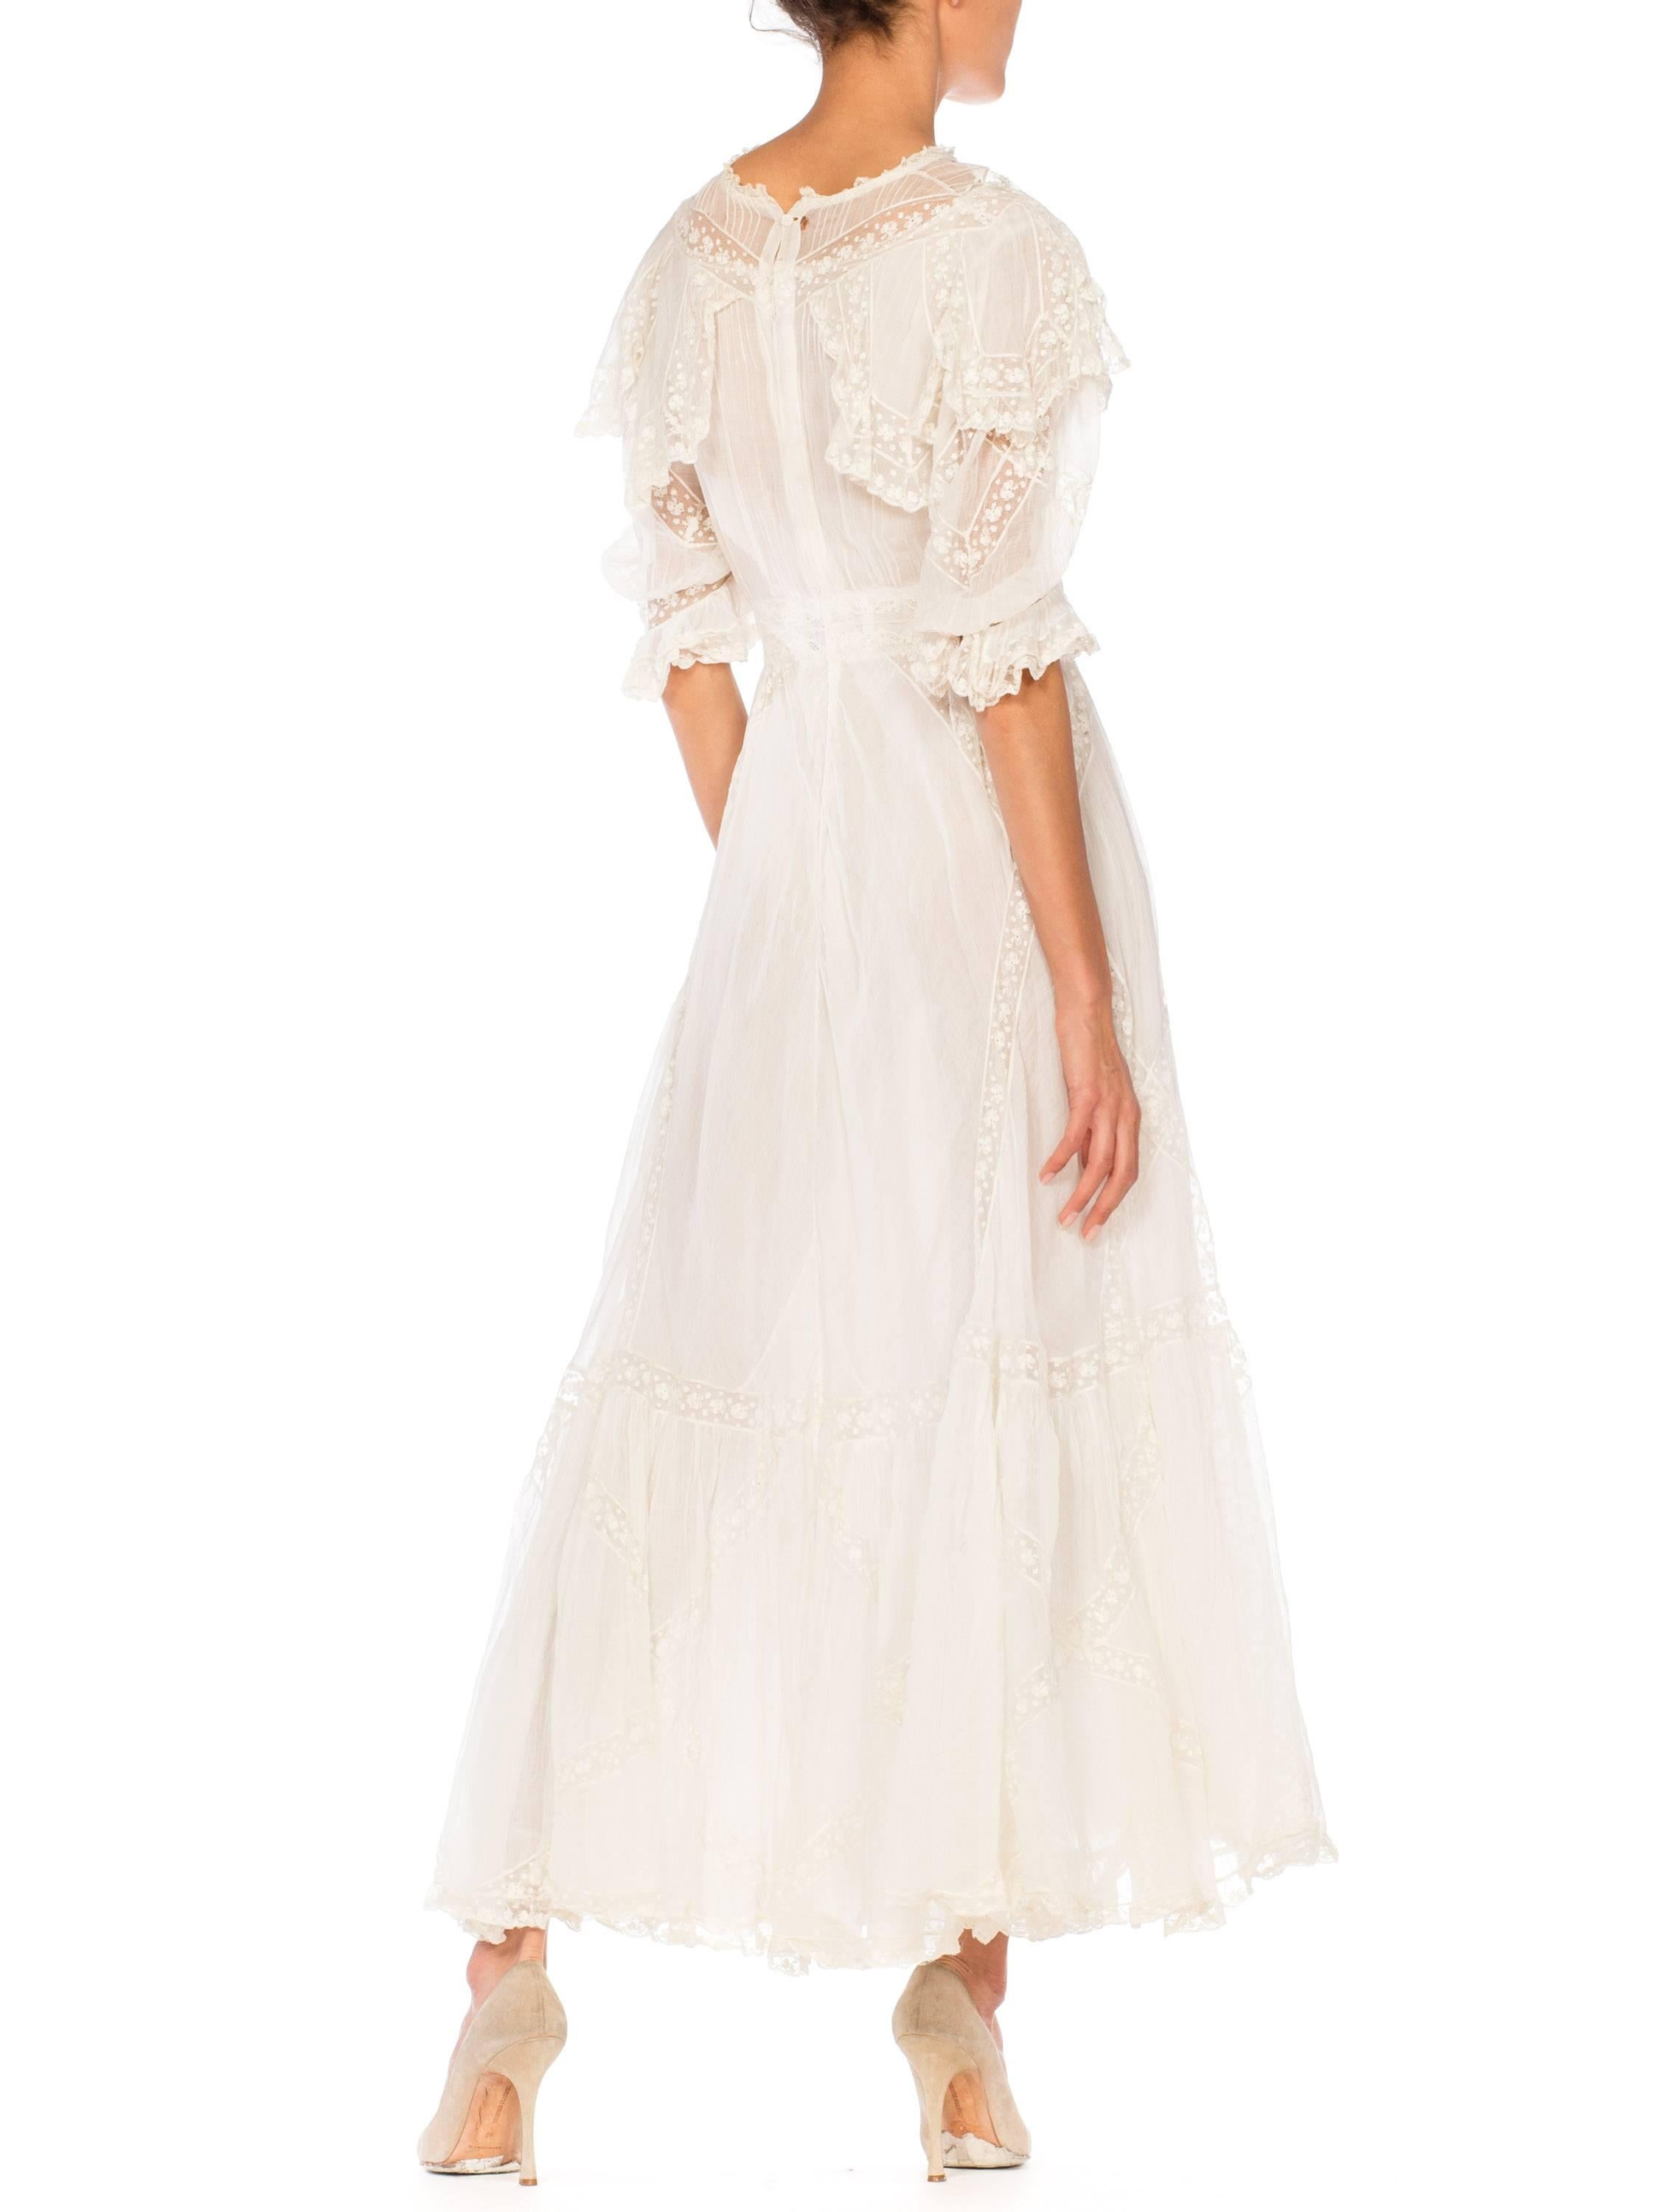 Belle Epoque Late Victorian Cotton and Lace Tea Dress 1